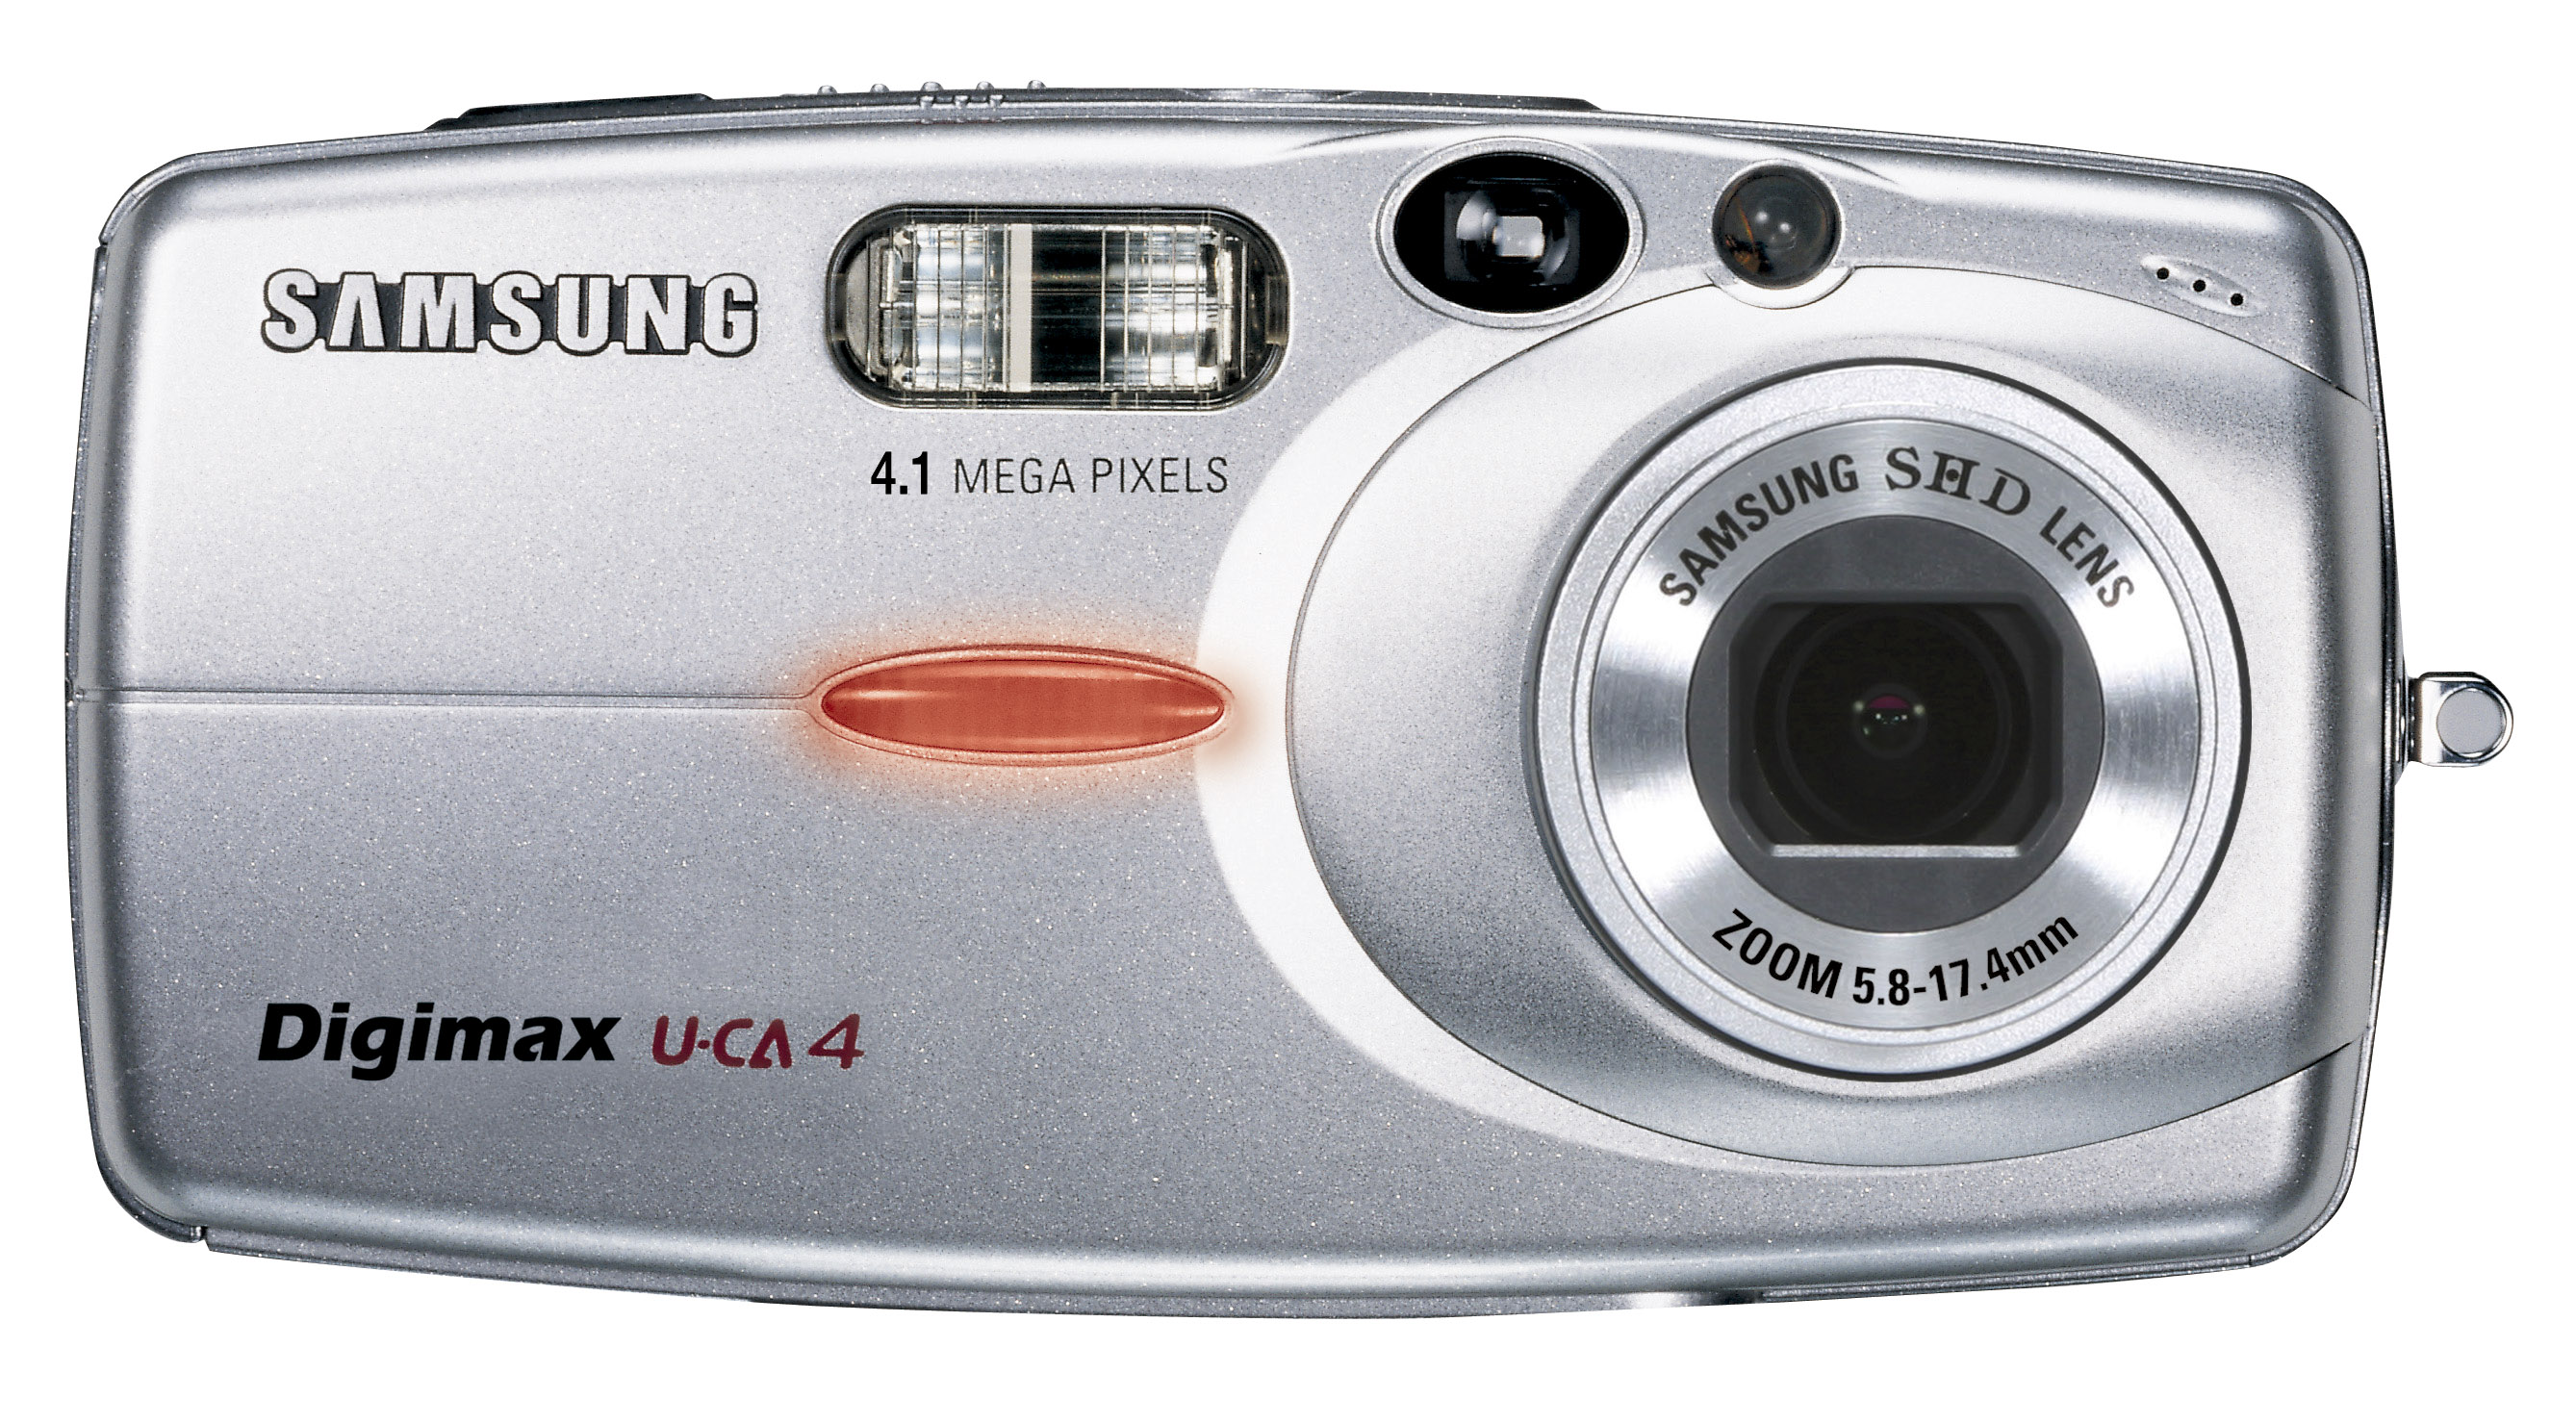 Samsung Digimax U-CA-4 Digital Camera